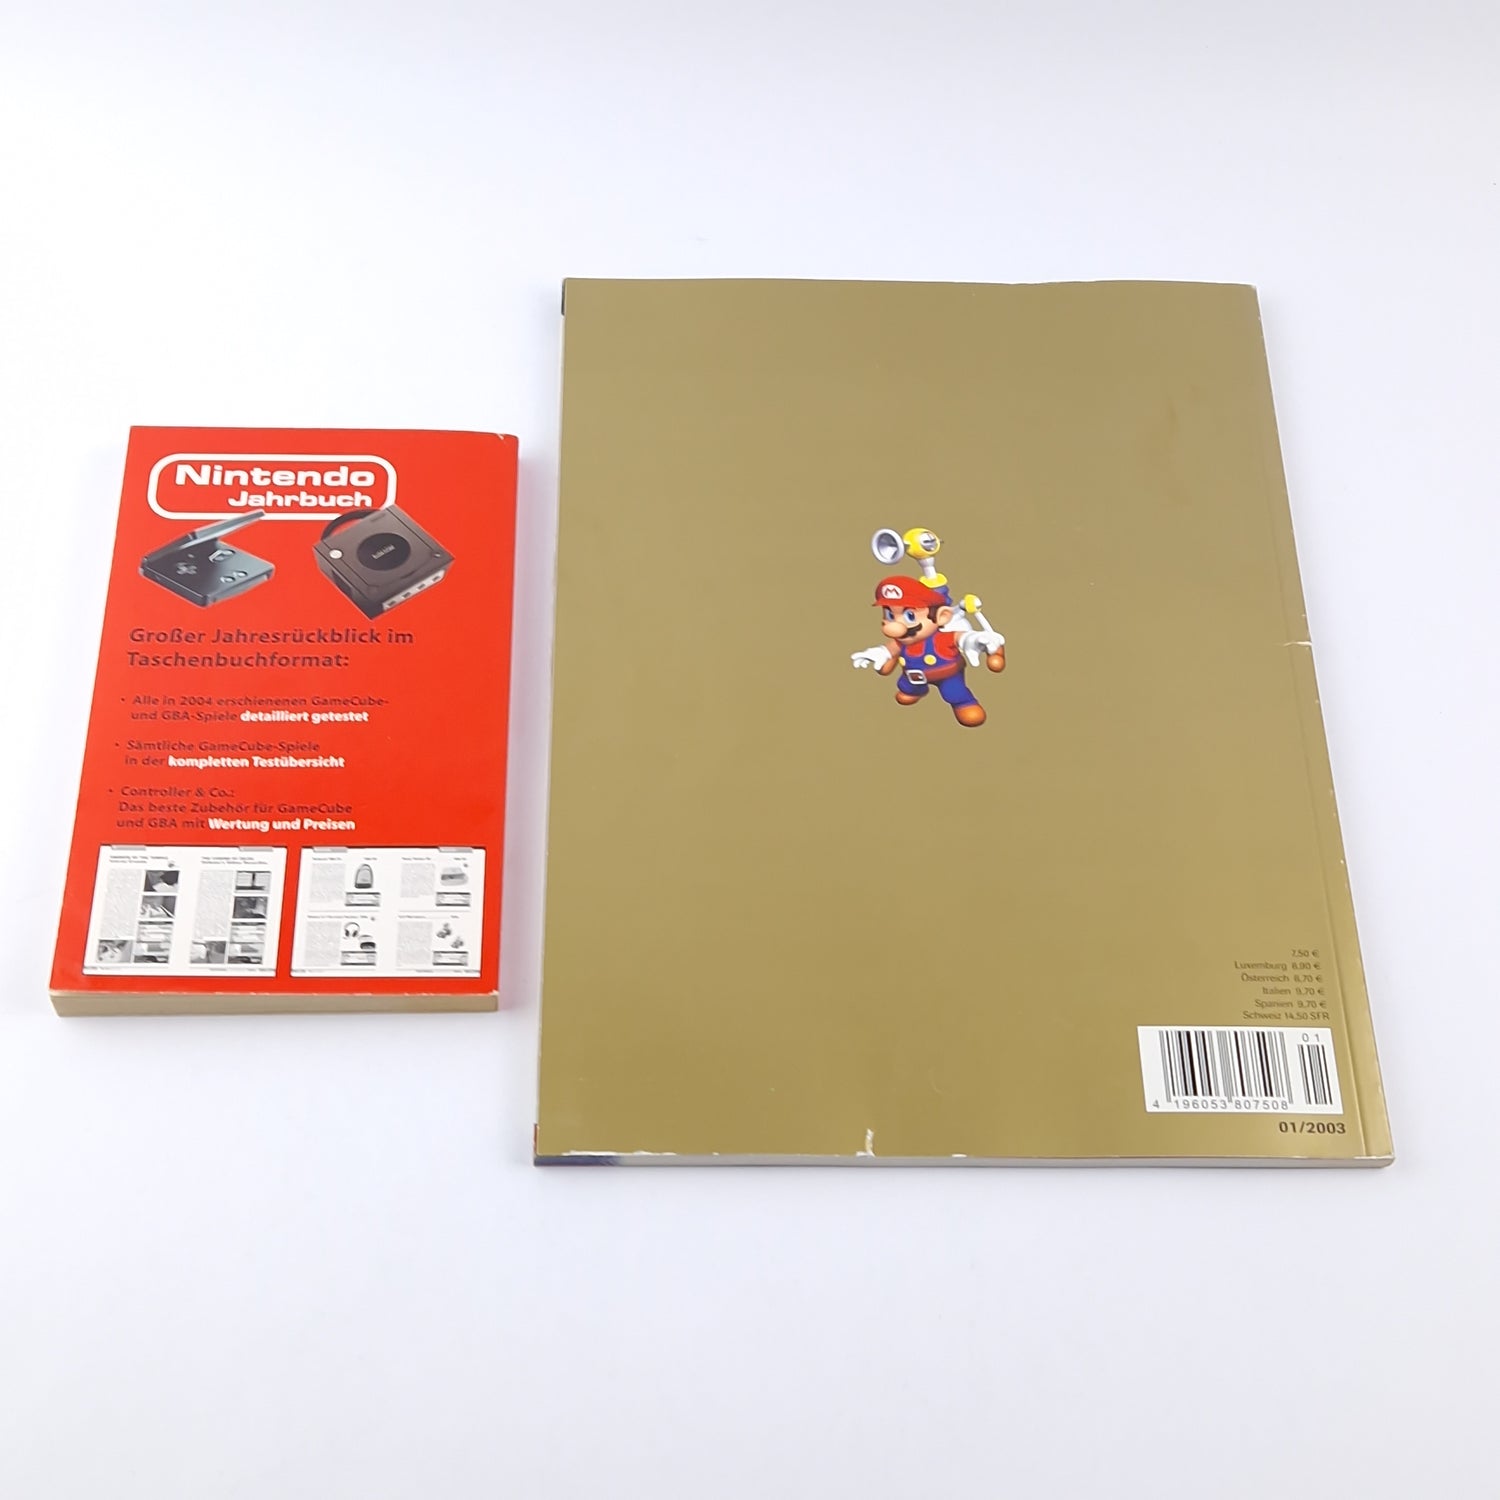 Nintendo Gamecube Jahrbuch 2002 & Nintendo Jahrbuch 2004 GBA Gamecube Magazin